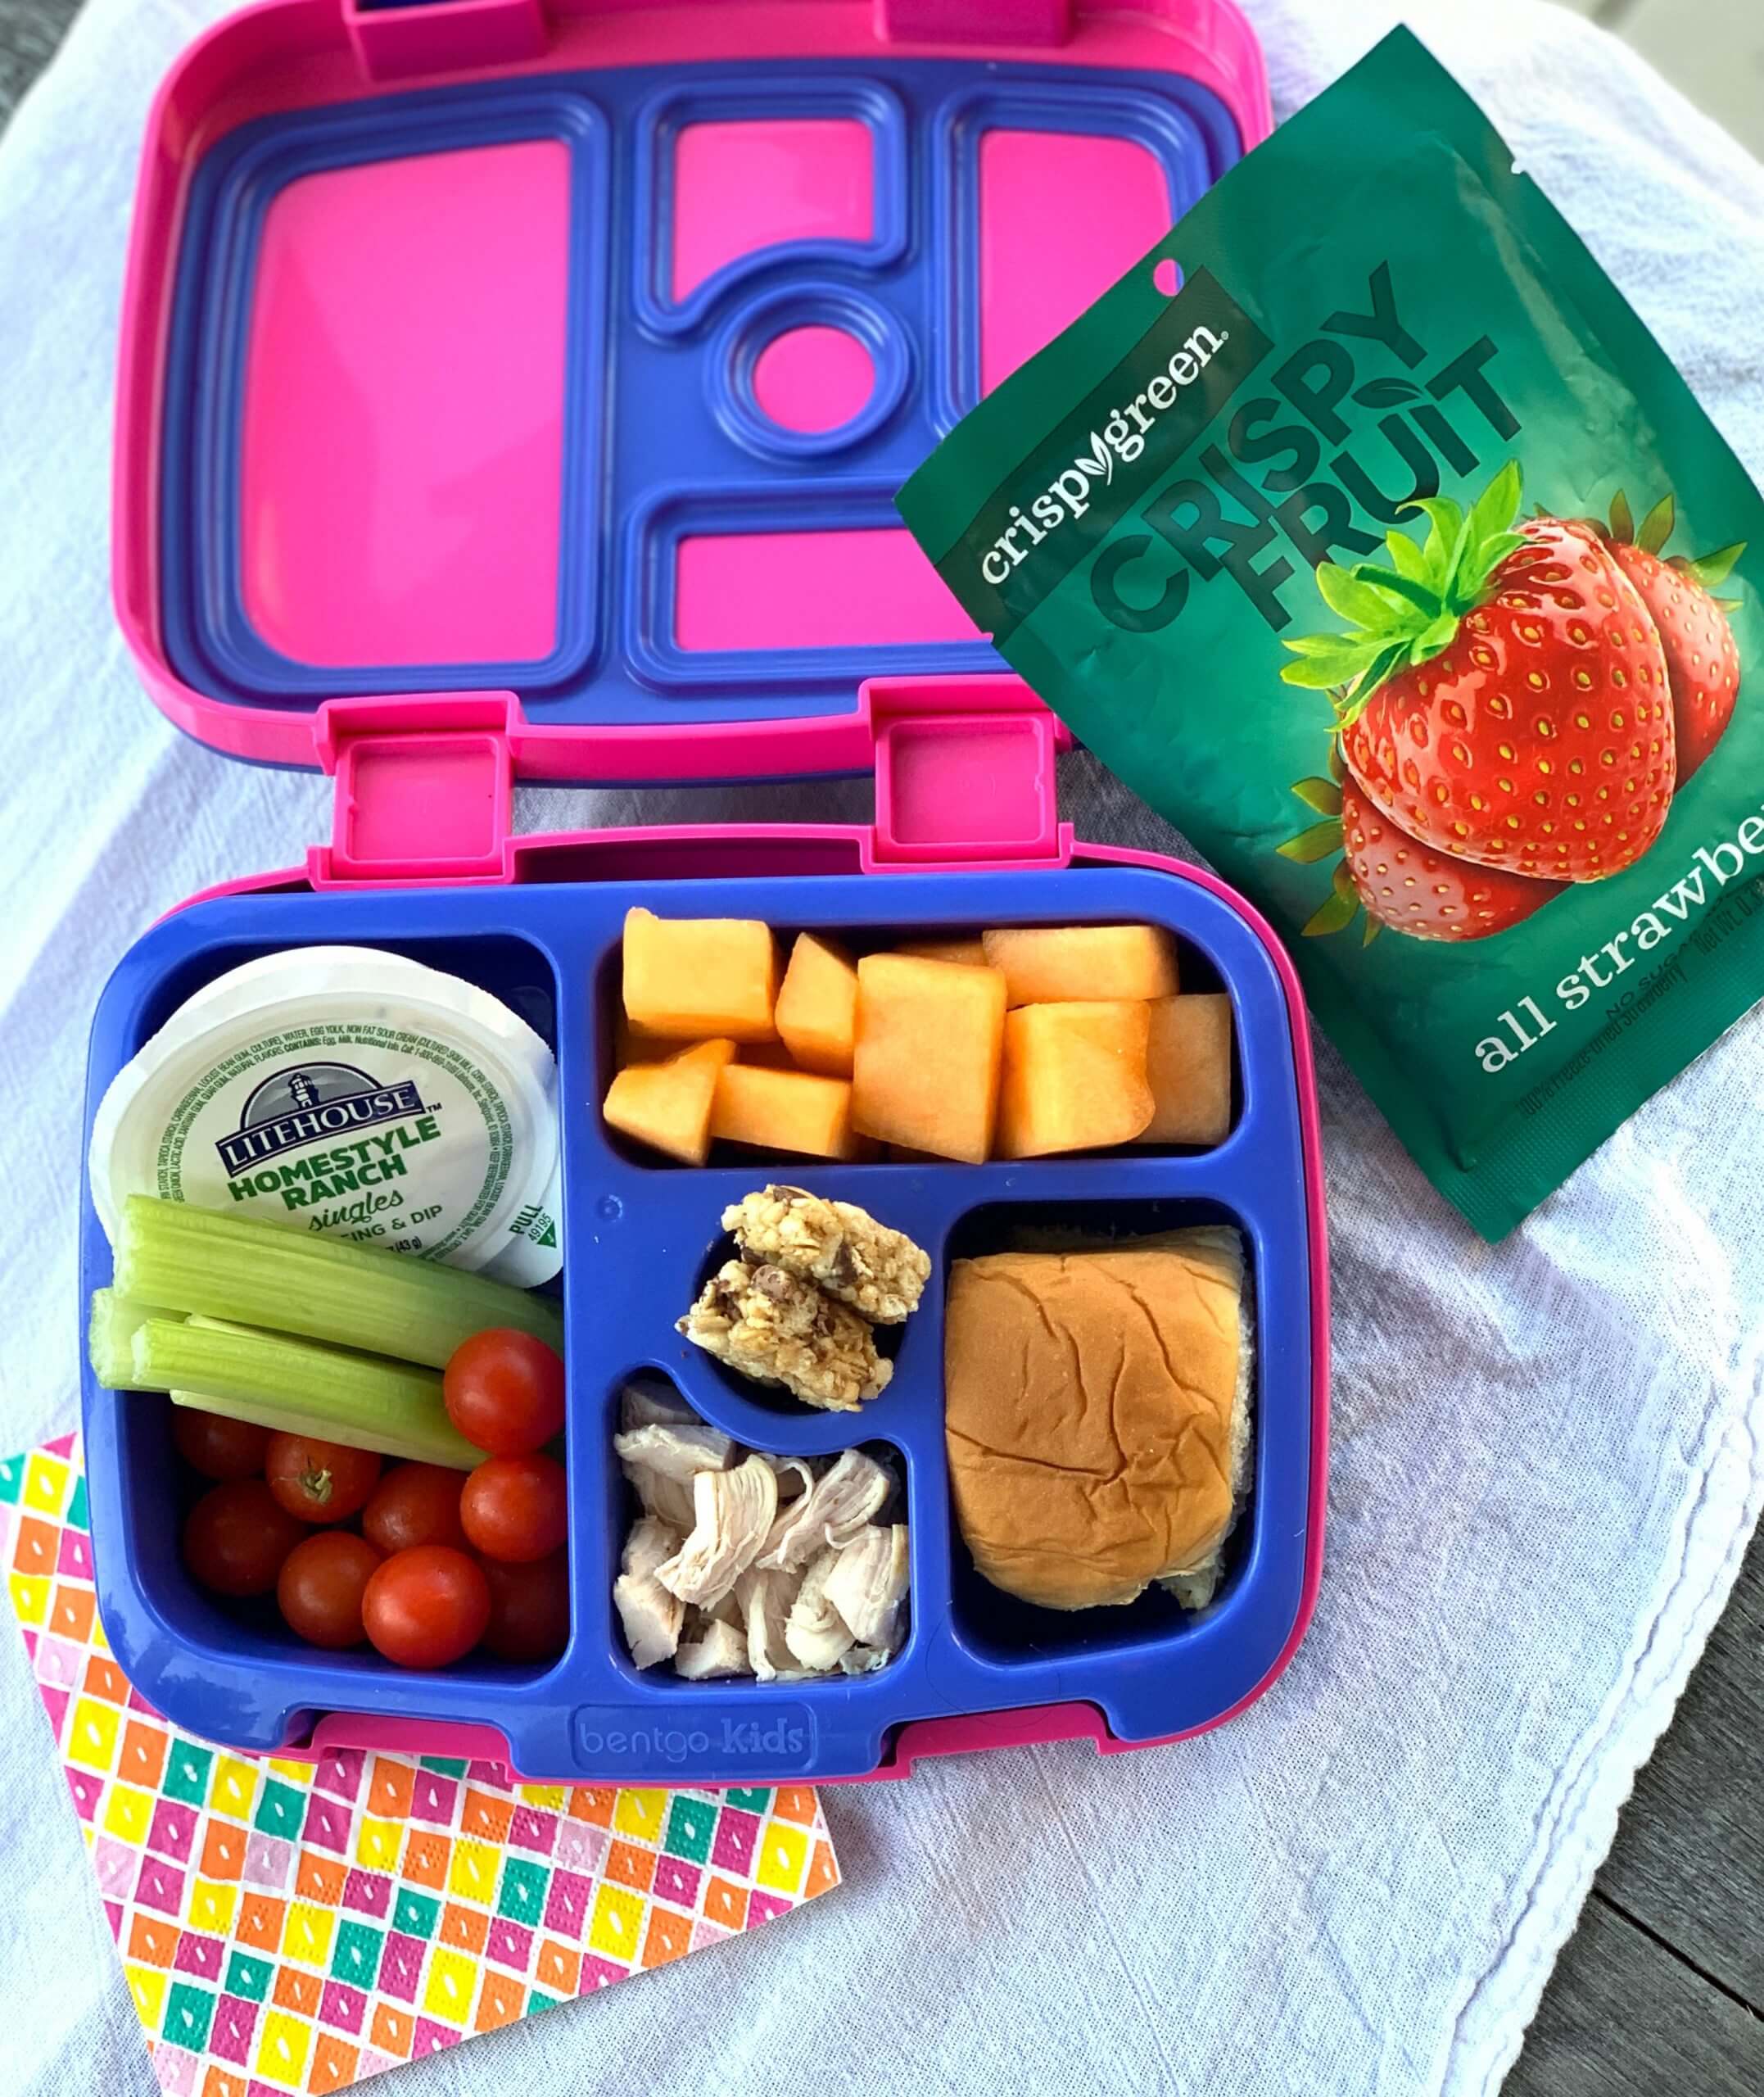 https://holleygrainger.com/wp-content/uploads/2020/08/Fruit-and-veggie-lunchbox-scaled.jpg